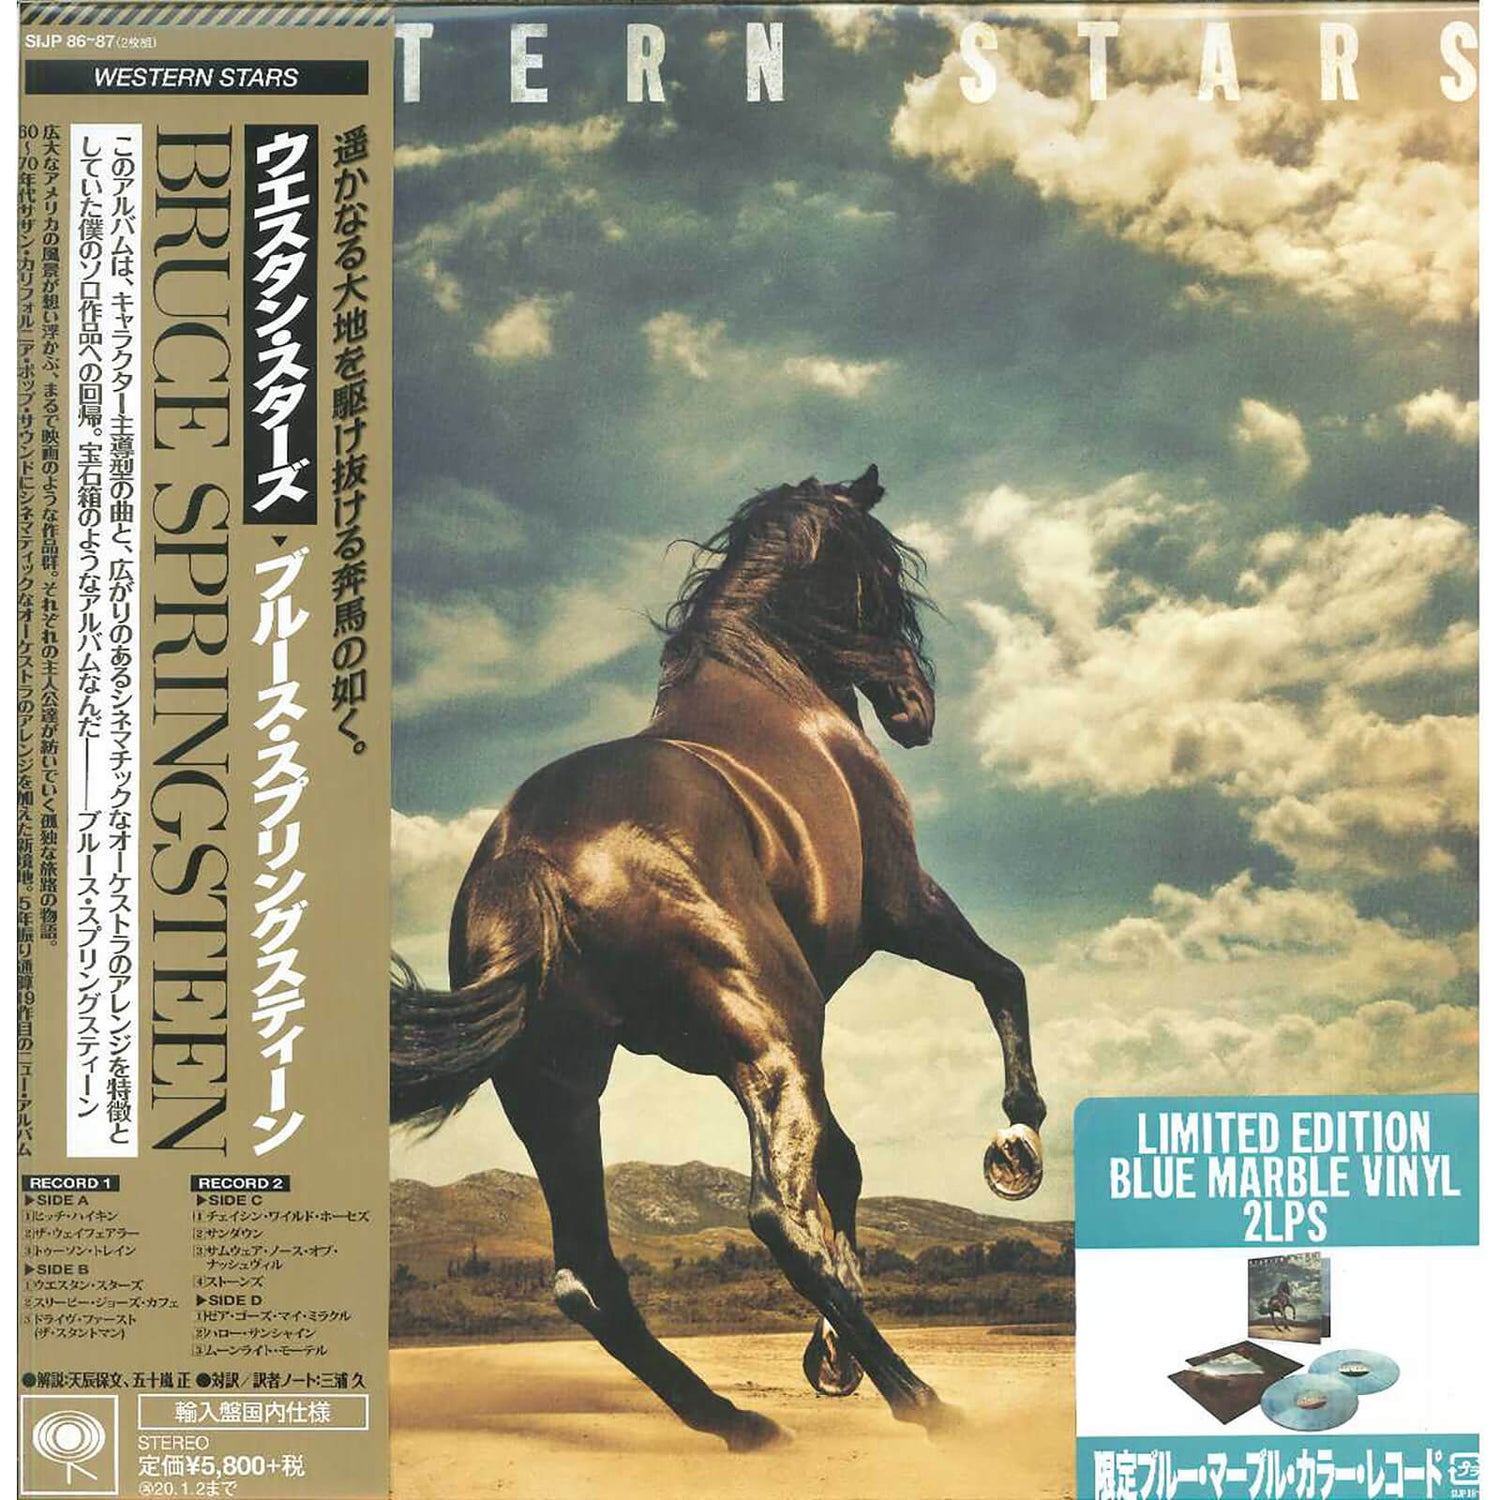 Bruce Springsteen - Western Stars Vinyl Japanese Edition